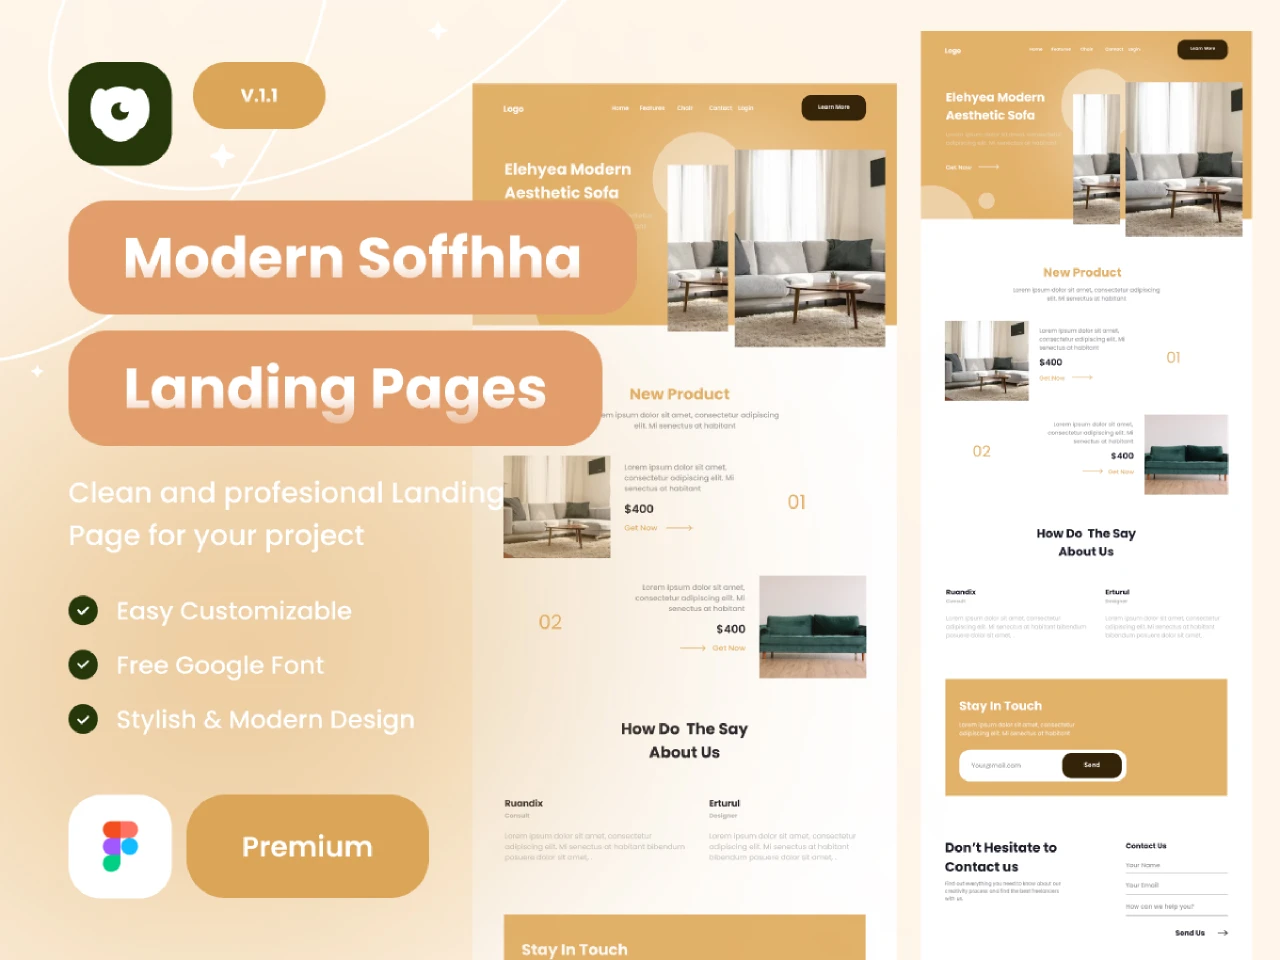 Modern Soffa landing page ui kits for Figma and Adobe XD